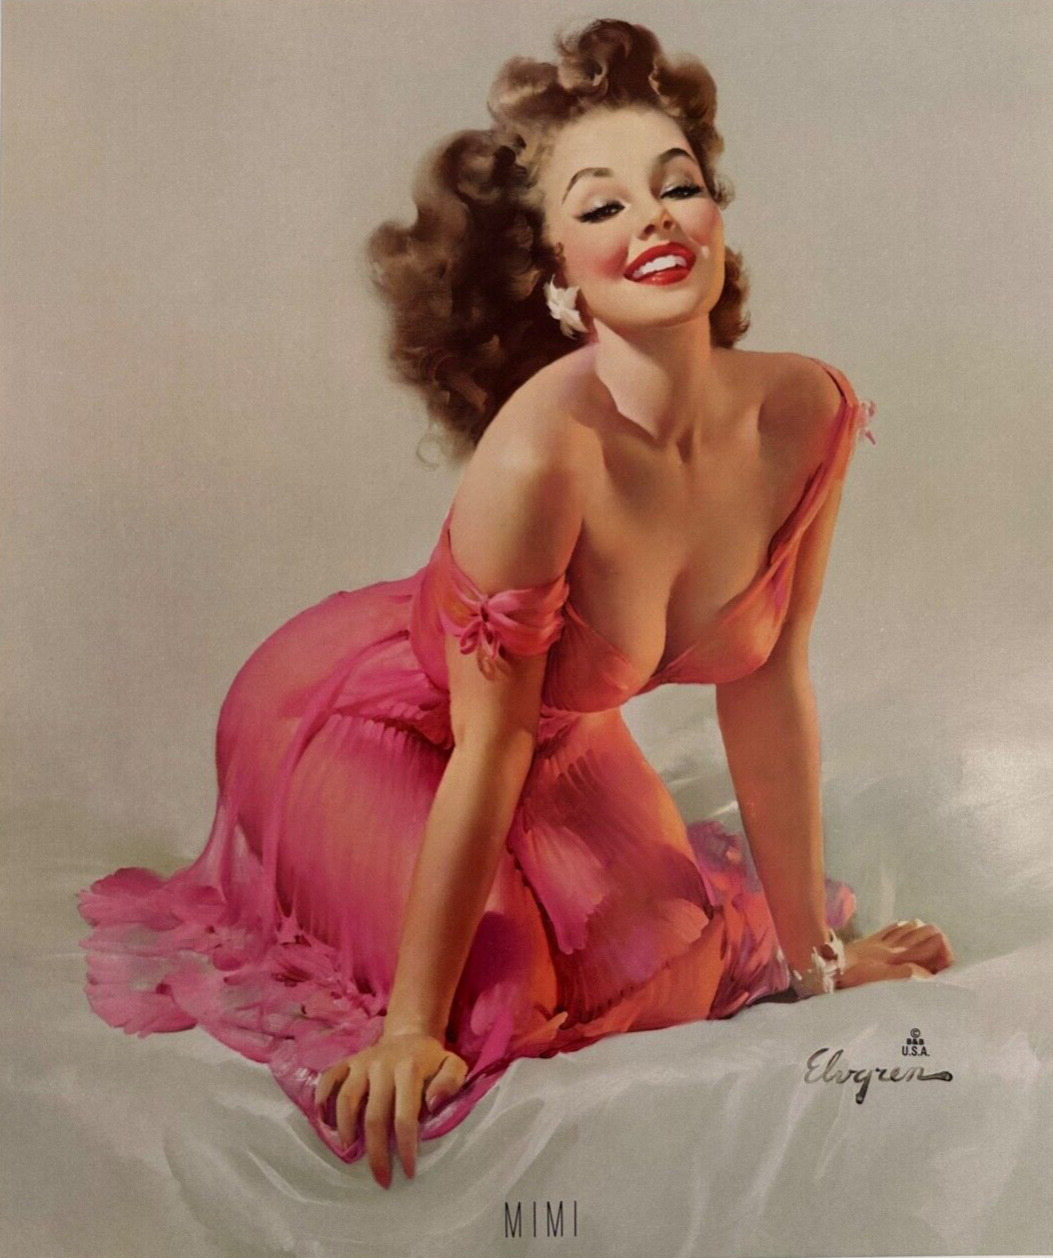 Mimi, Original 1956 Vintage Gil Elvgren Pin-Up Print, Gorgeous Brunette in Pink